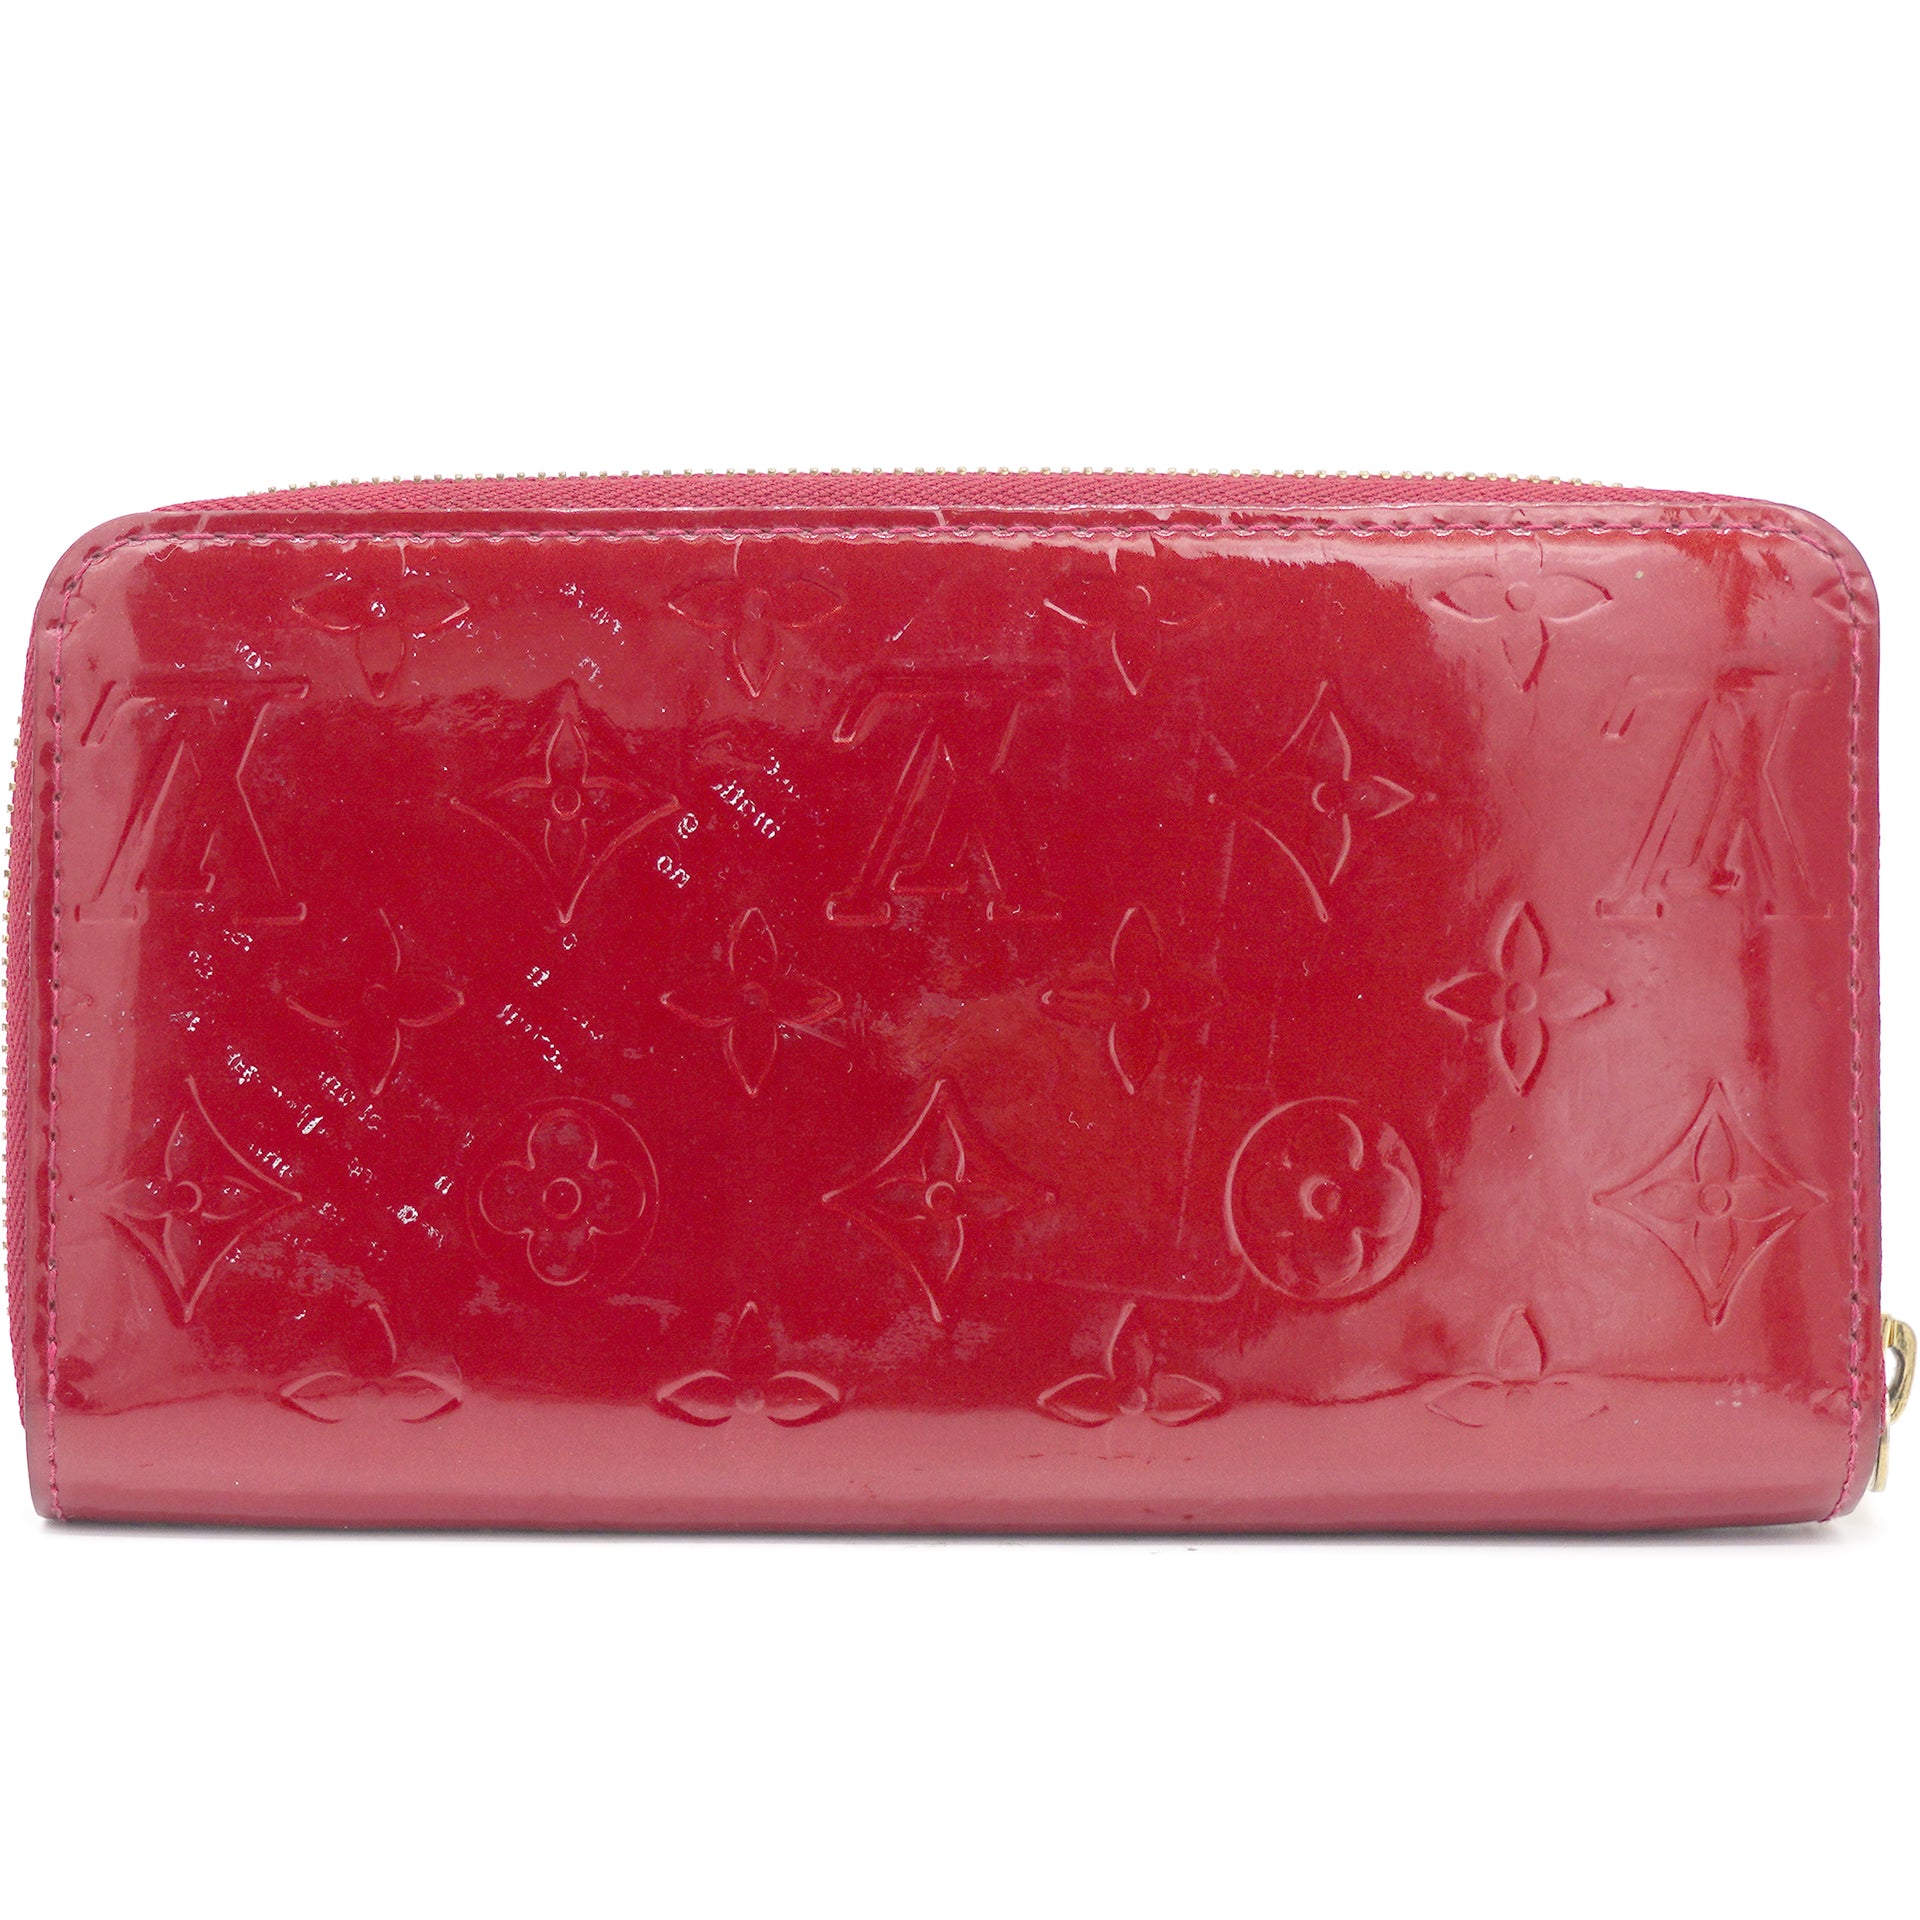 Red Monogram Vernis Leather Zippy Wallet